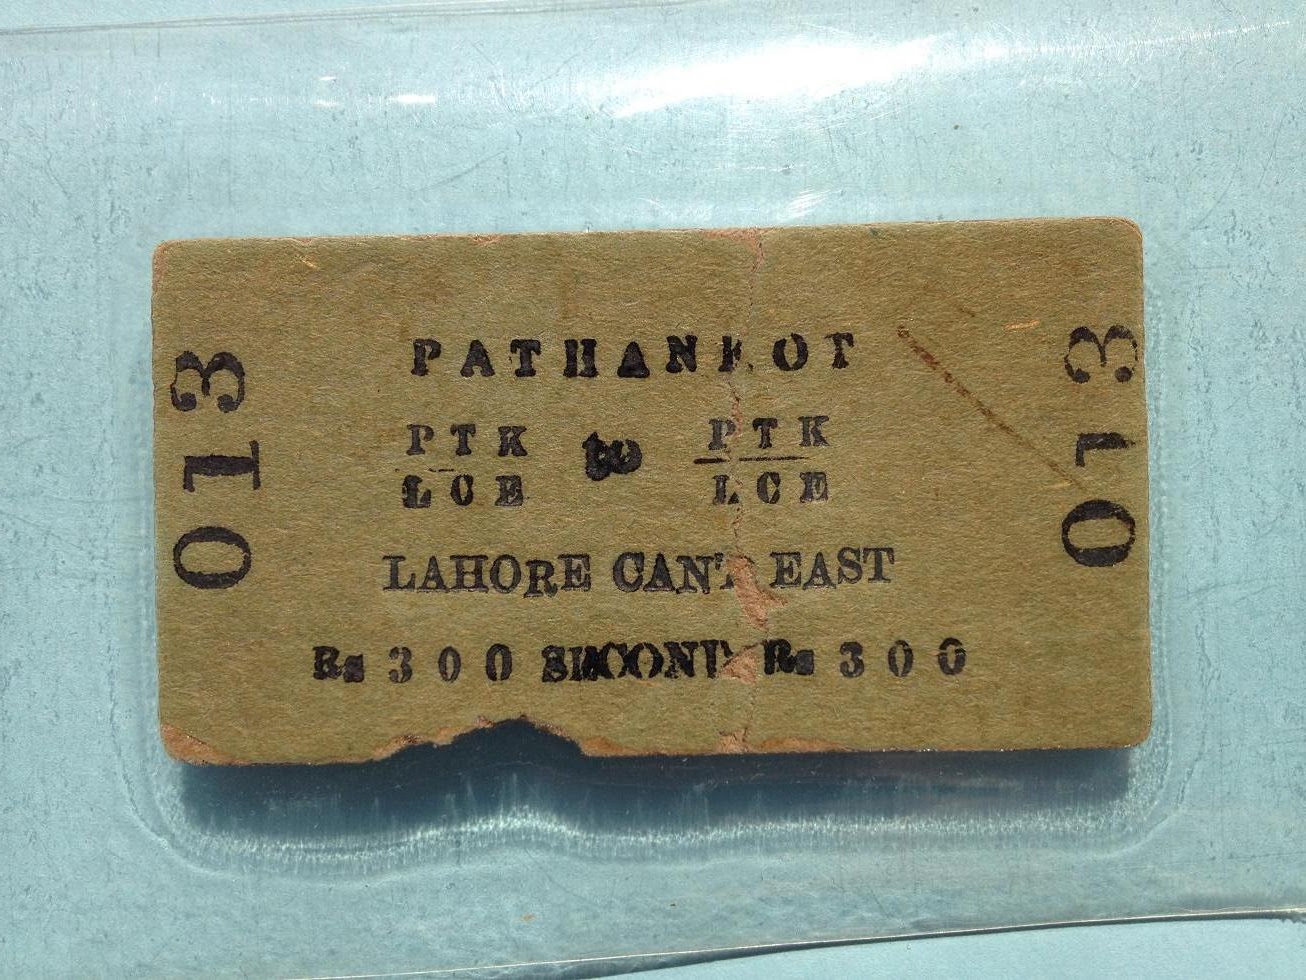 Old Train ticket.